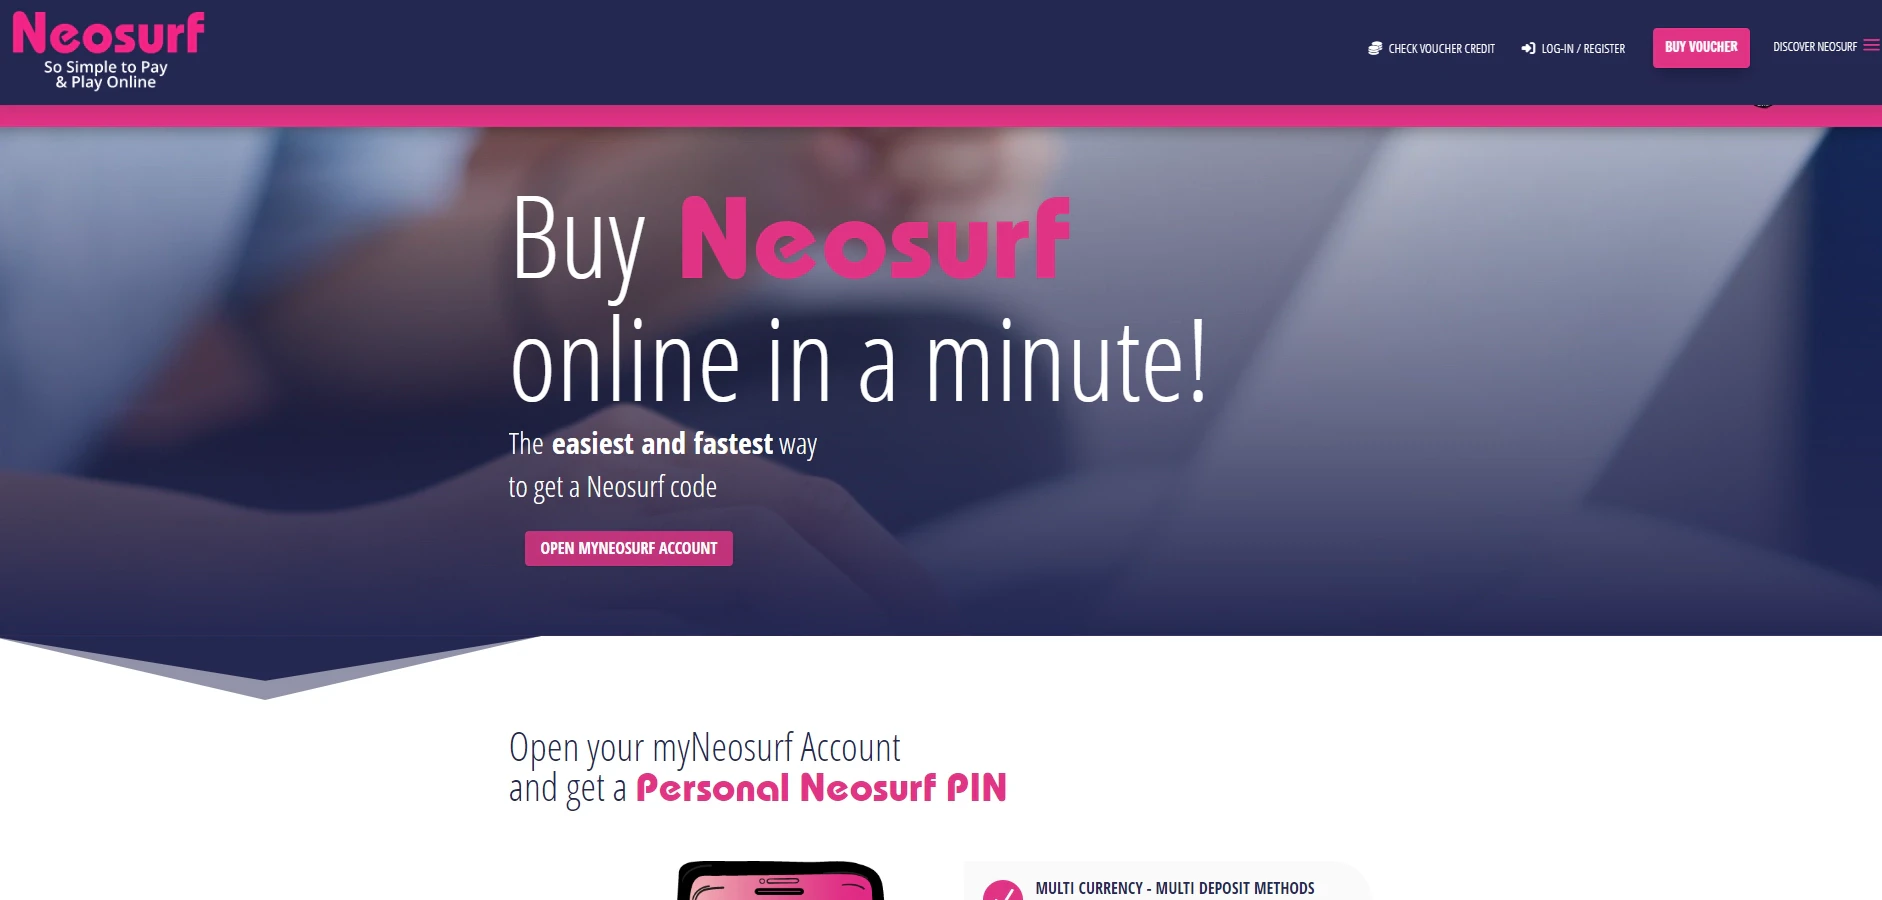 Buy Neosurf online